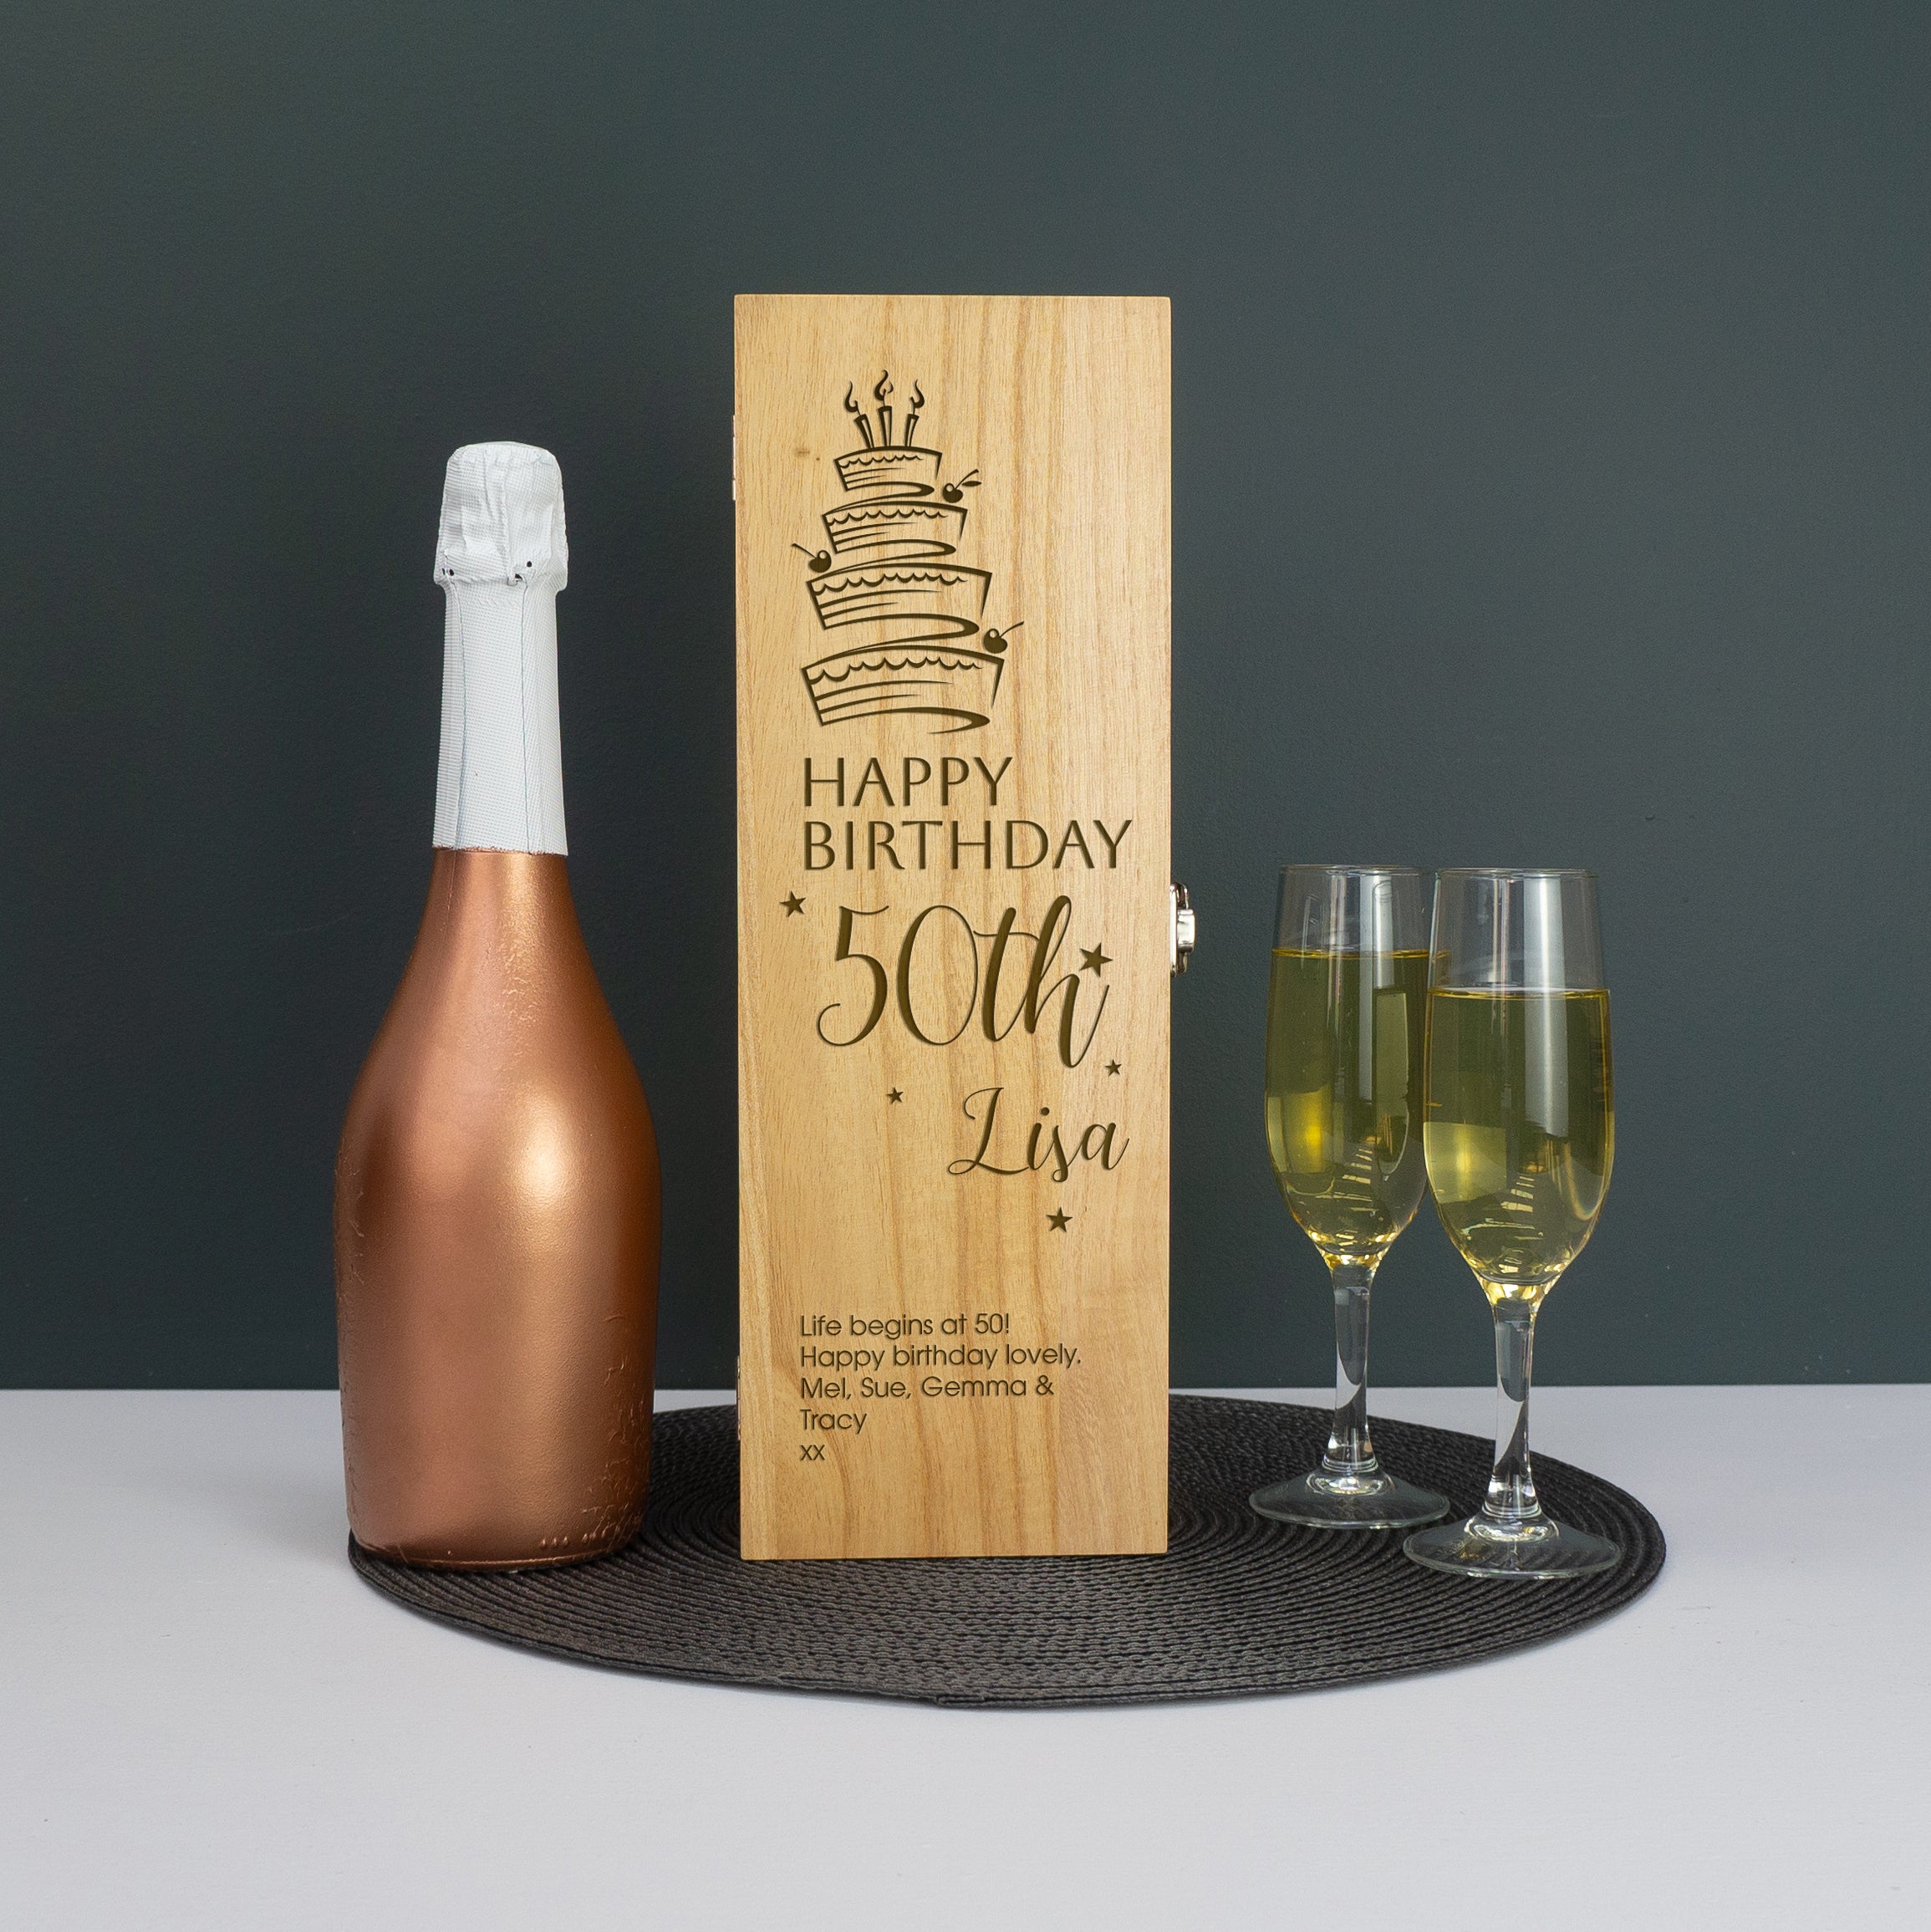 50th birthday wine champagne bottle gifting box